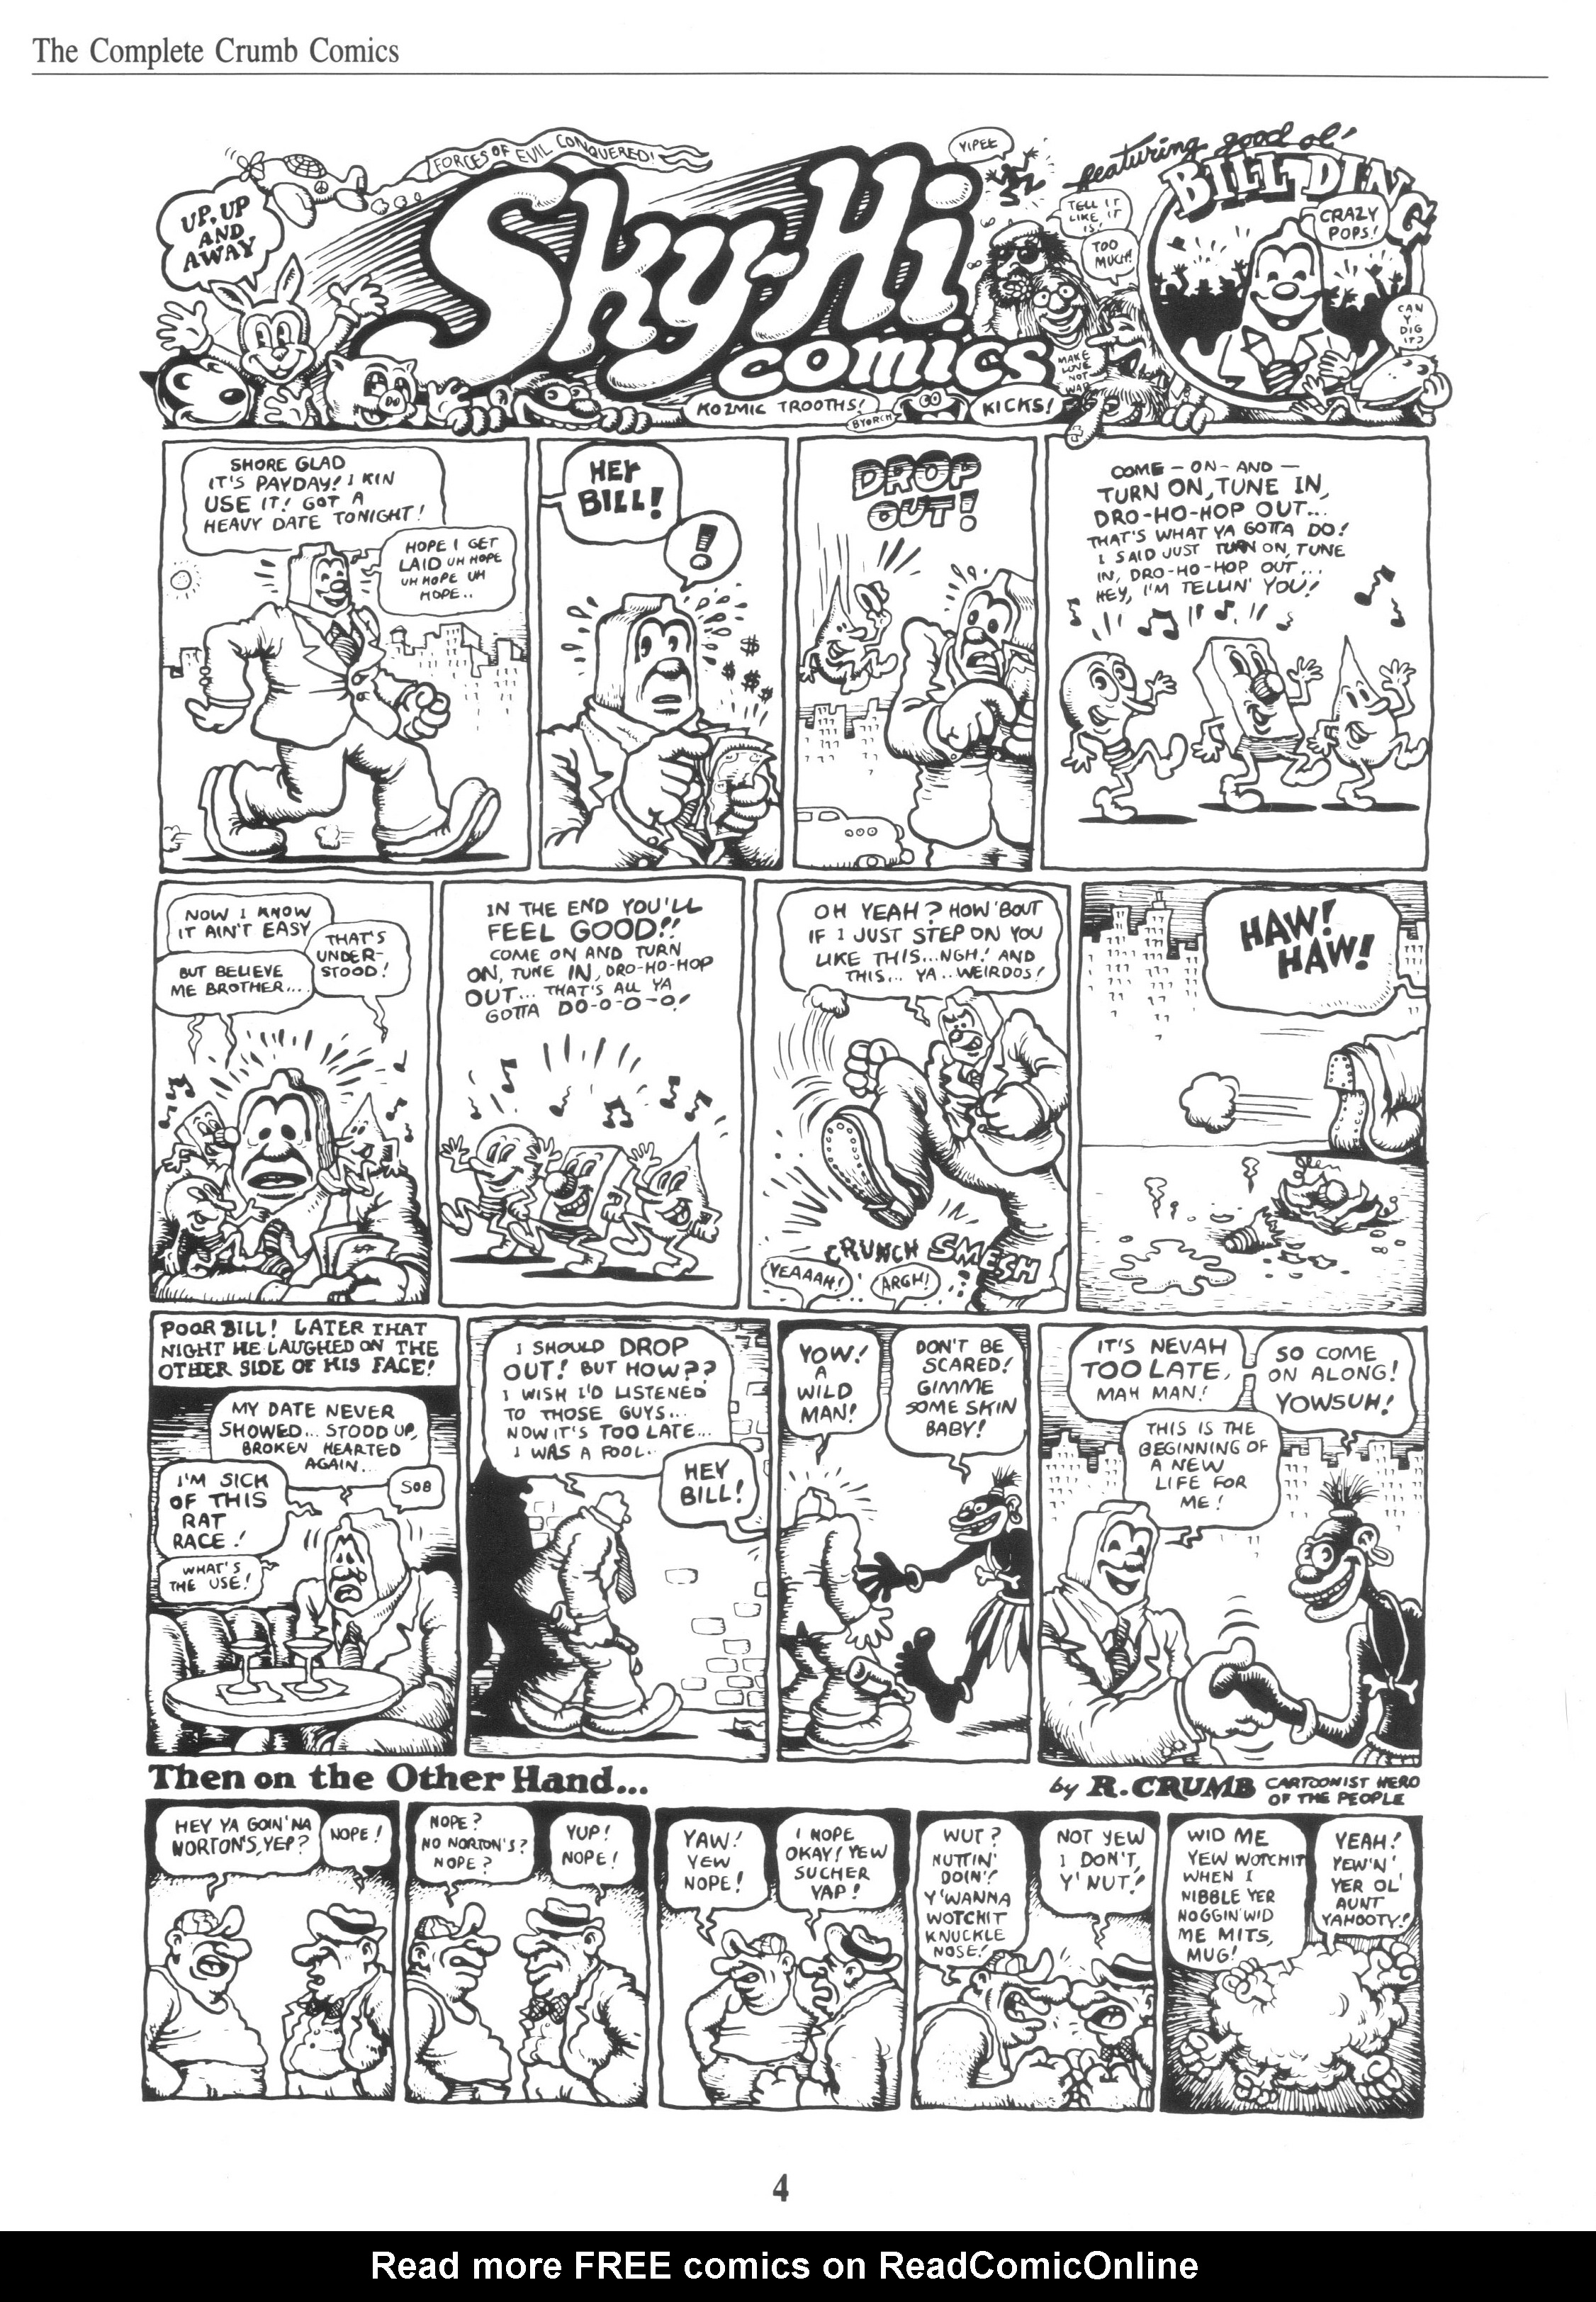 Read online The Complete Crumb Comics comic -  Issue # TPB 5 - 15